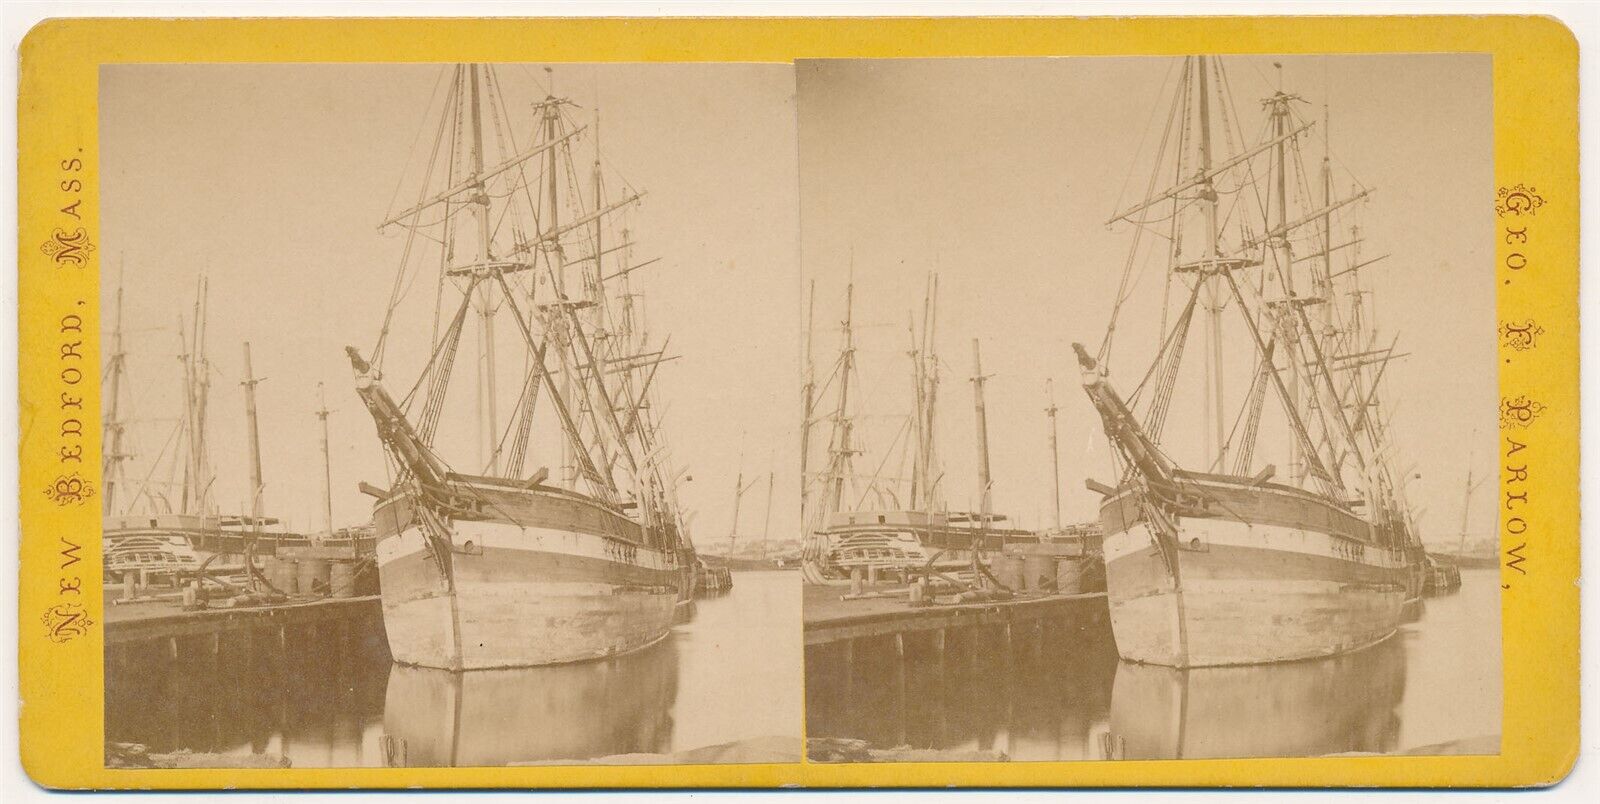 MASSACHUSETTS SV - New Bedford - Tall Ship - GF Parlow 1870s